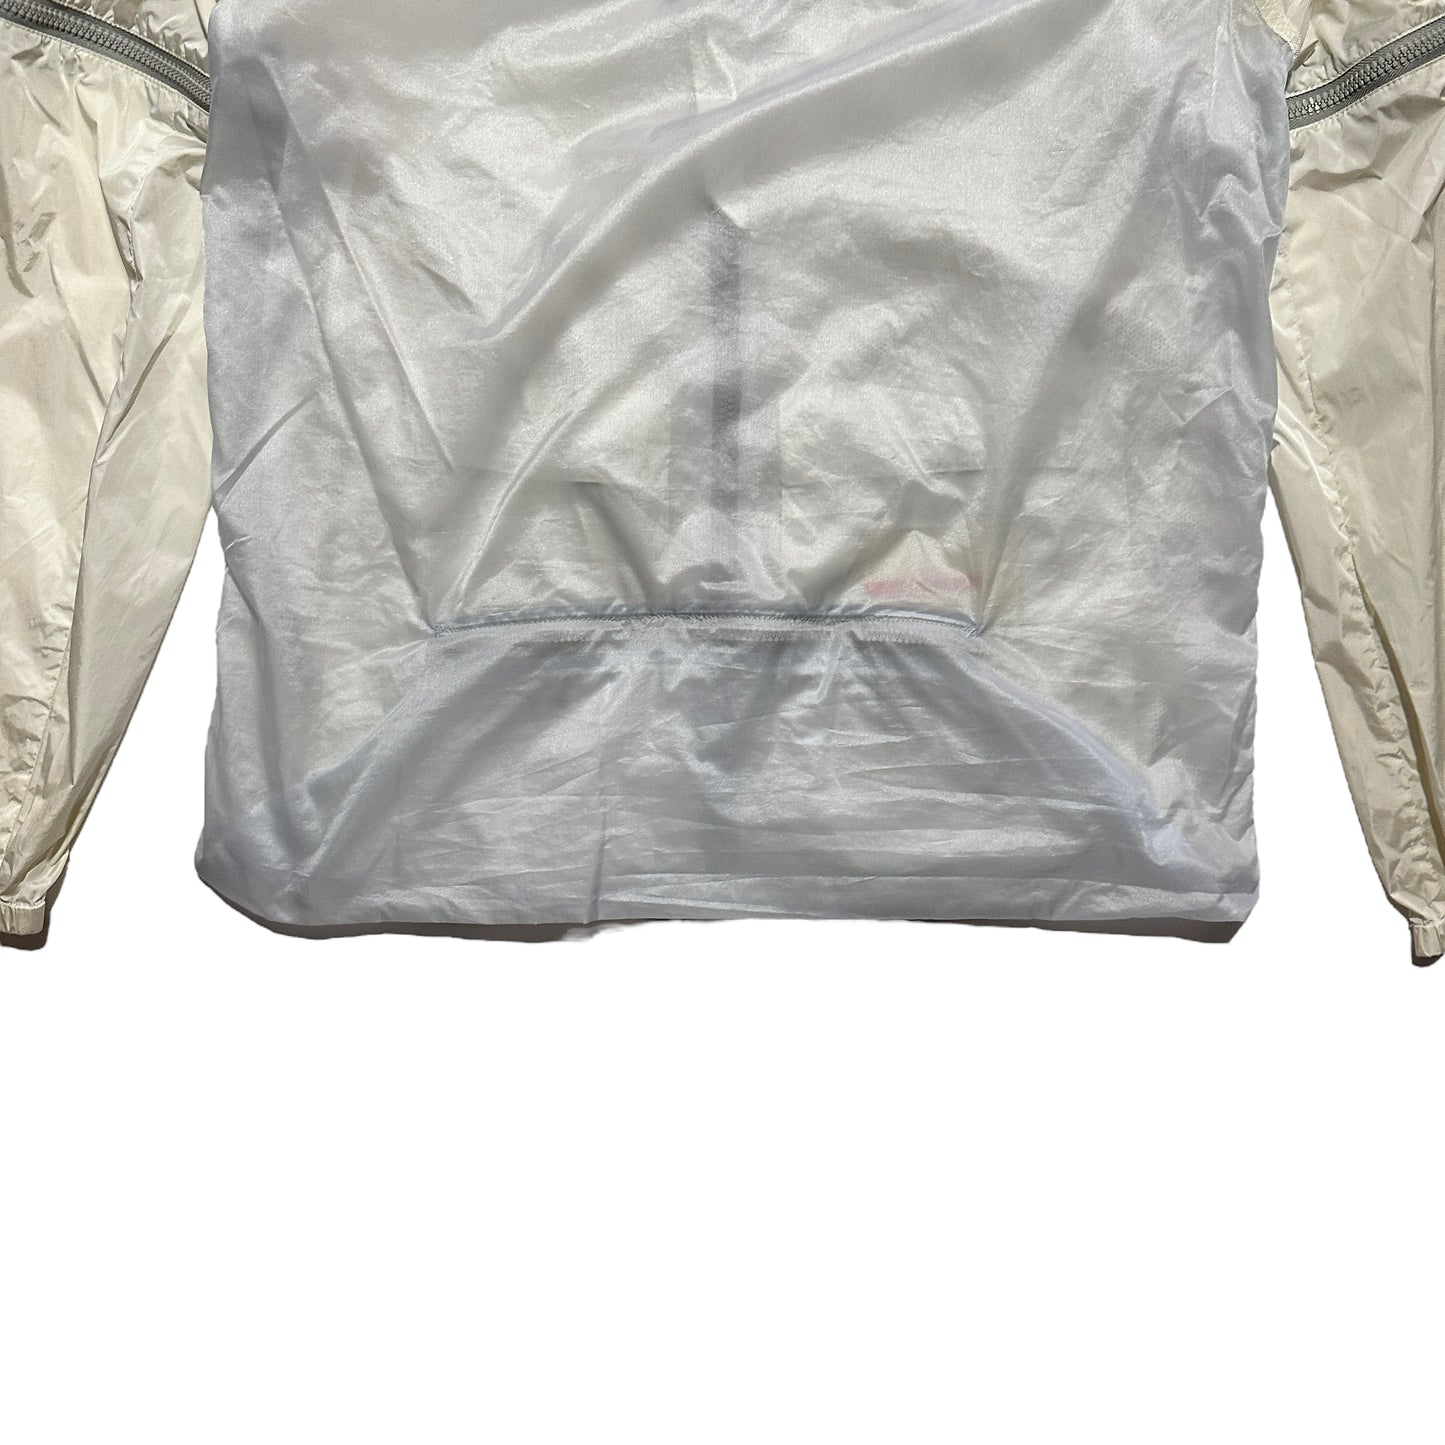 S/S 2000 Prada Light Jacket (48)